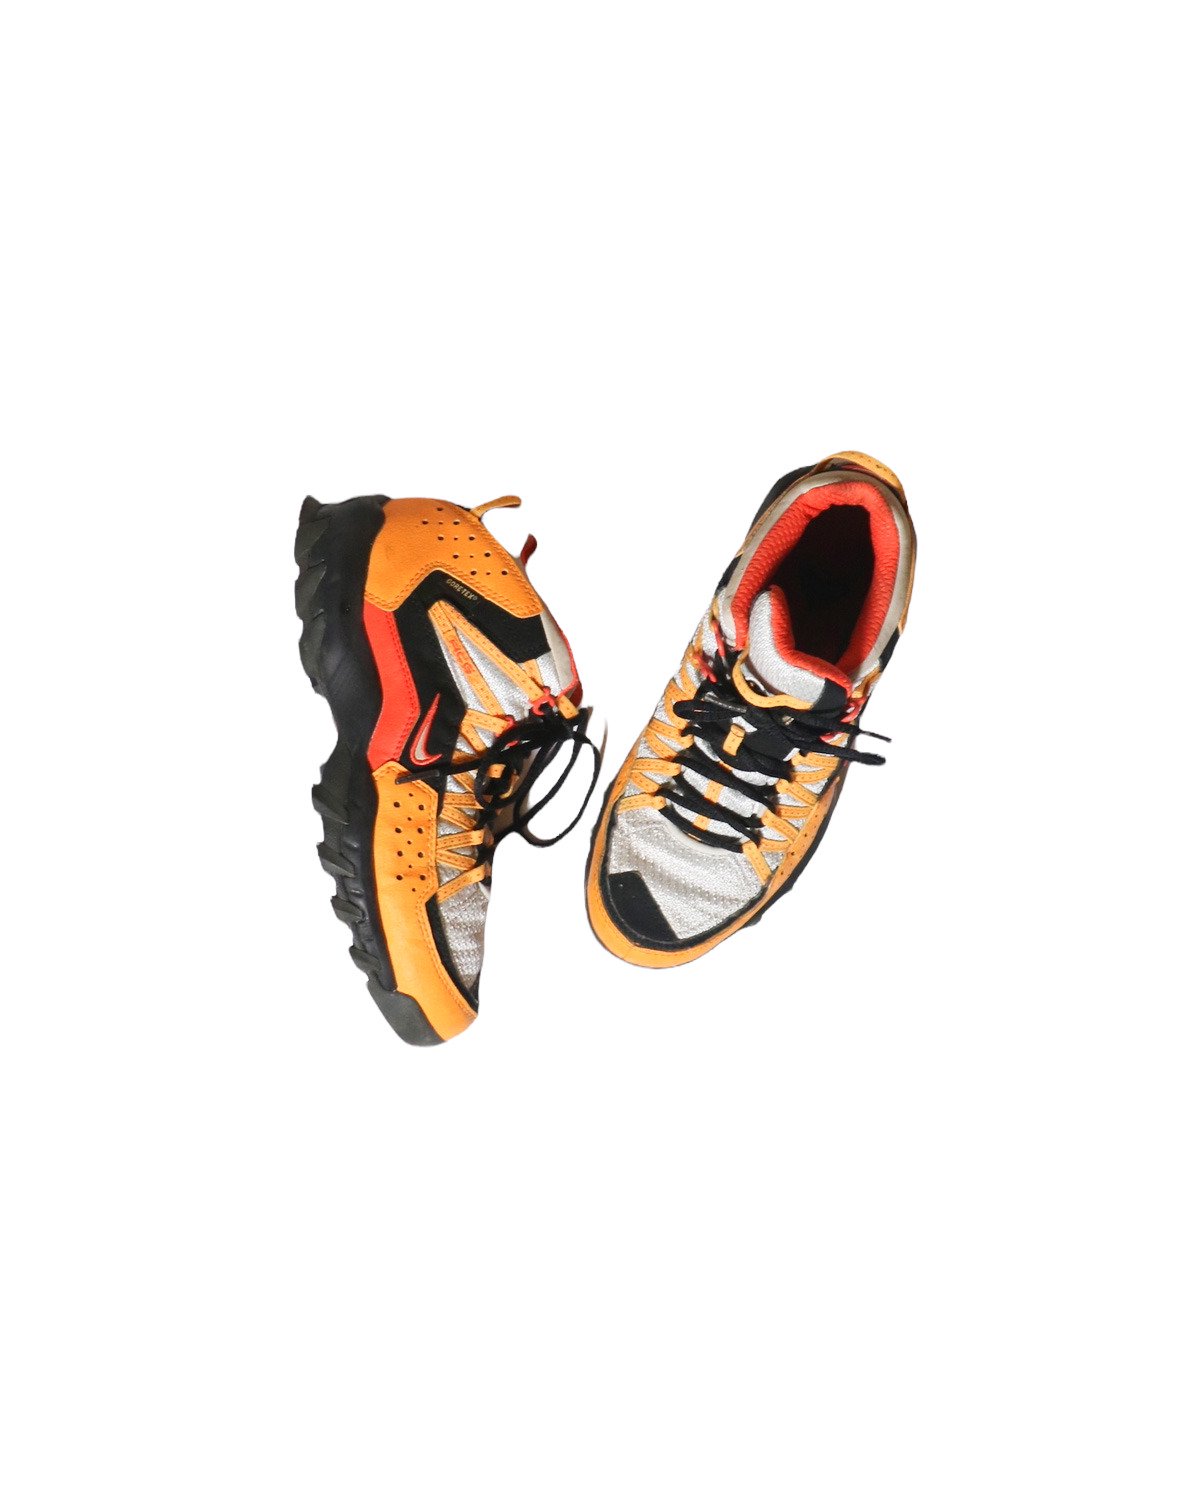 “NIKE ACG” Trekking Shoes (GORE-TEX)